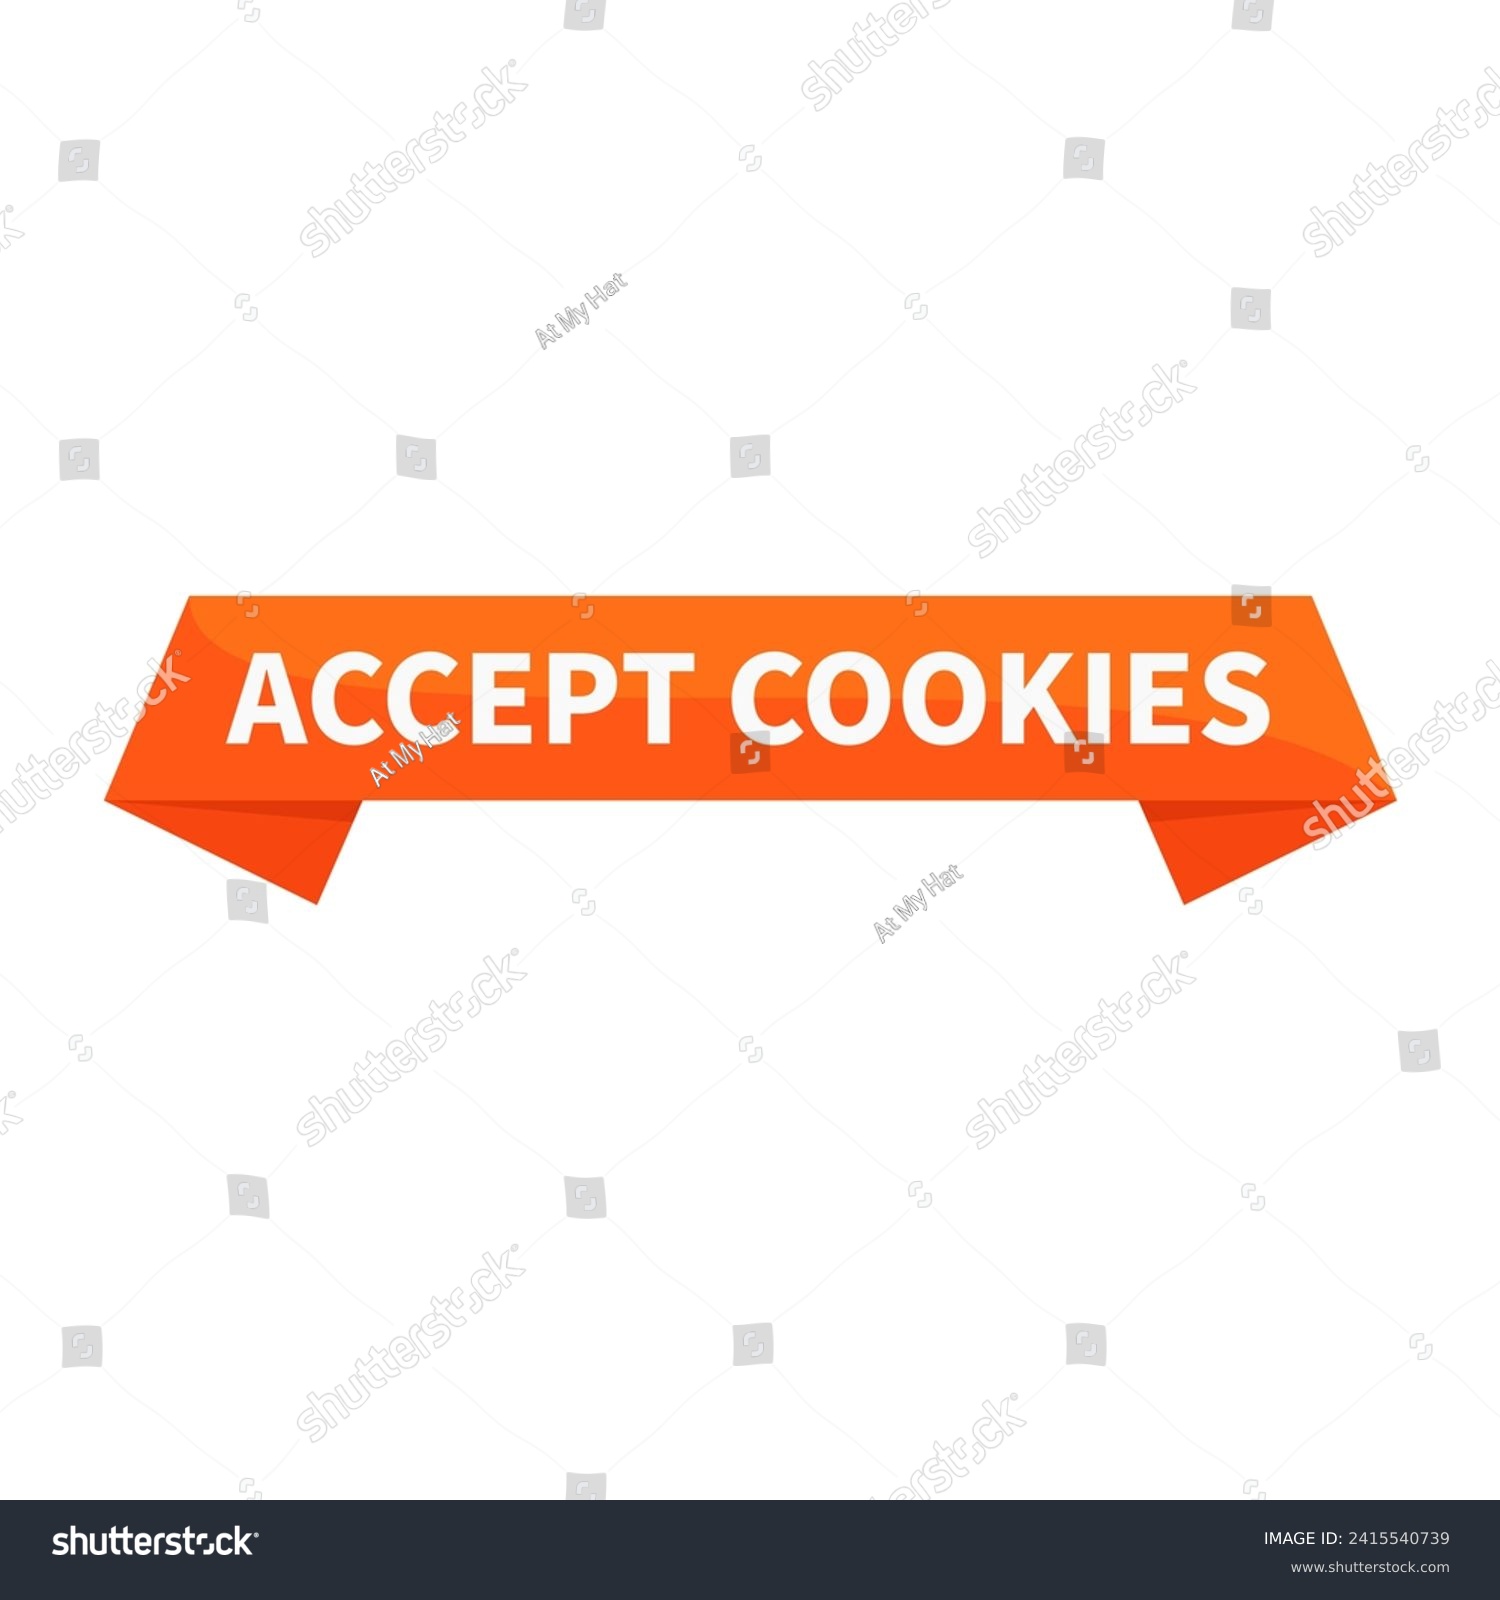 SVG of Accept Cookies Orange Rectangle Ribbon Shape For Sign Information Website Security
 svg